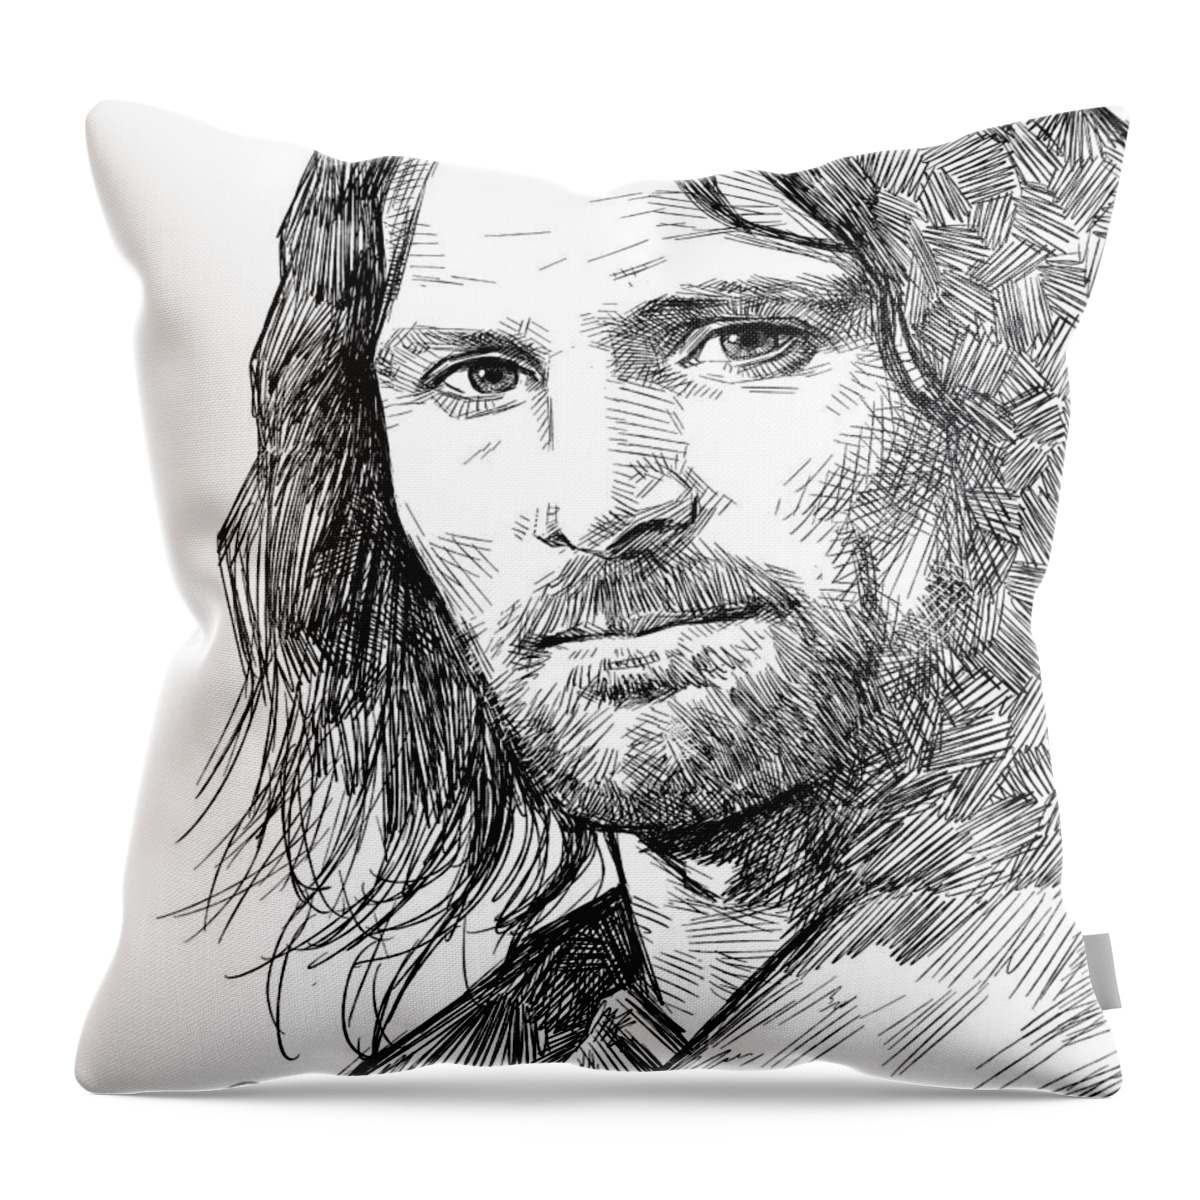 Aragorn Throw Pillow featuring the digital art Aragorn - Viggo Mortensen by Darko B